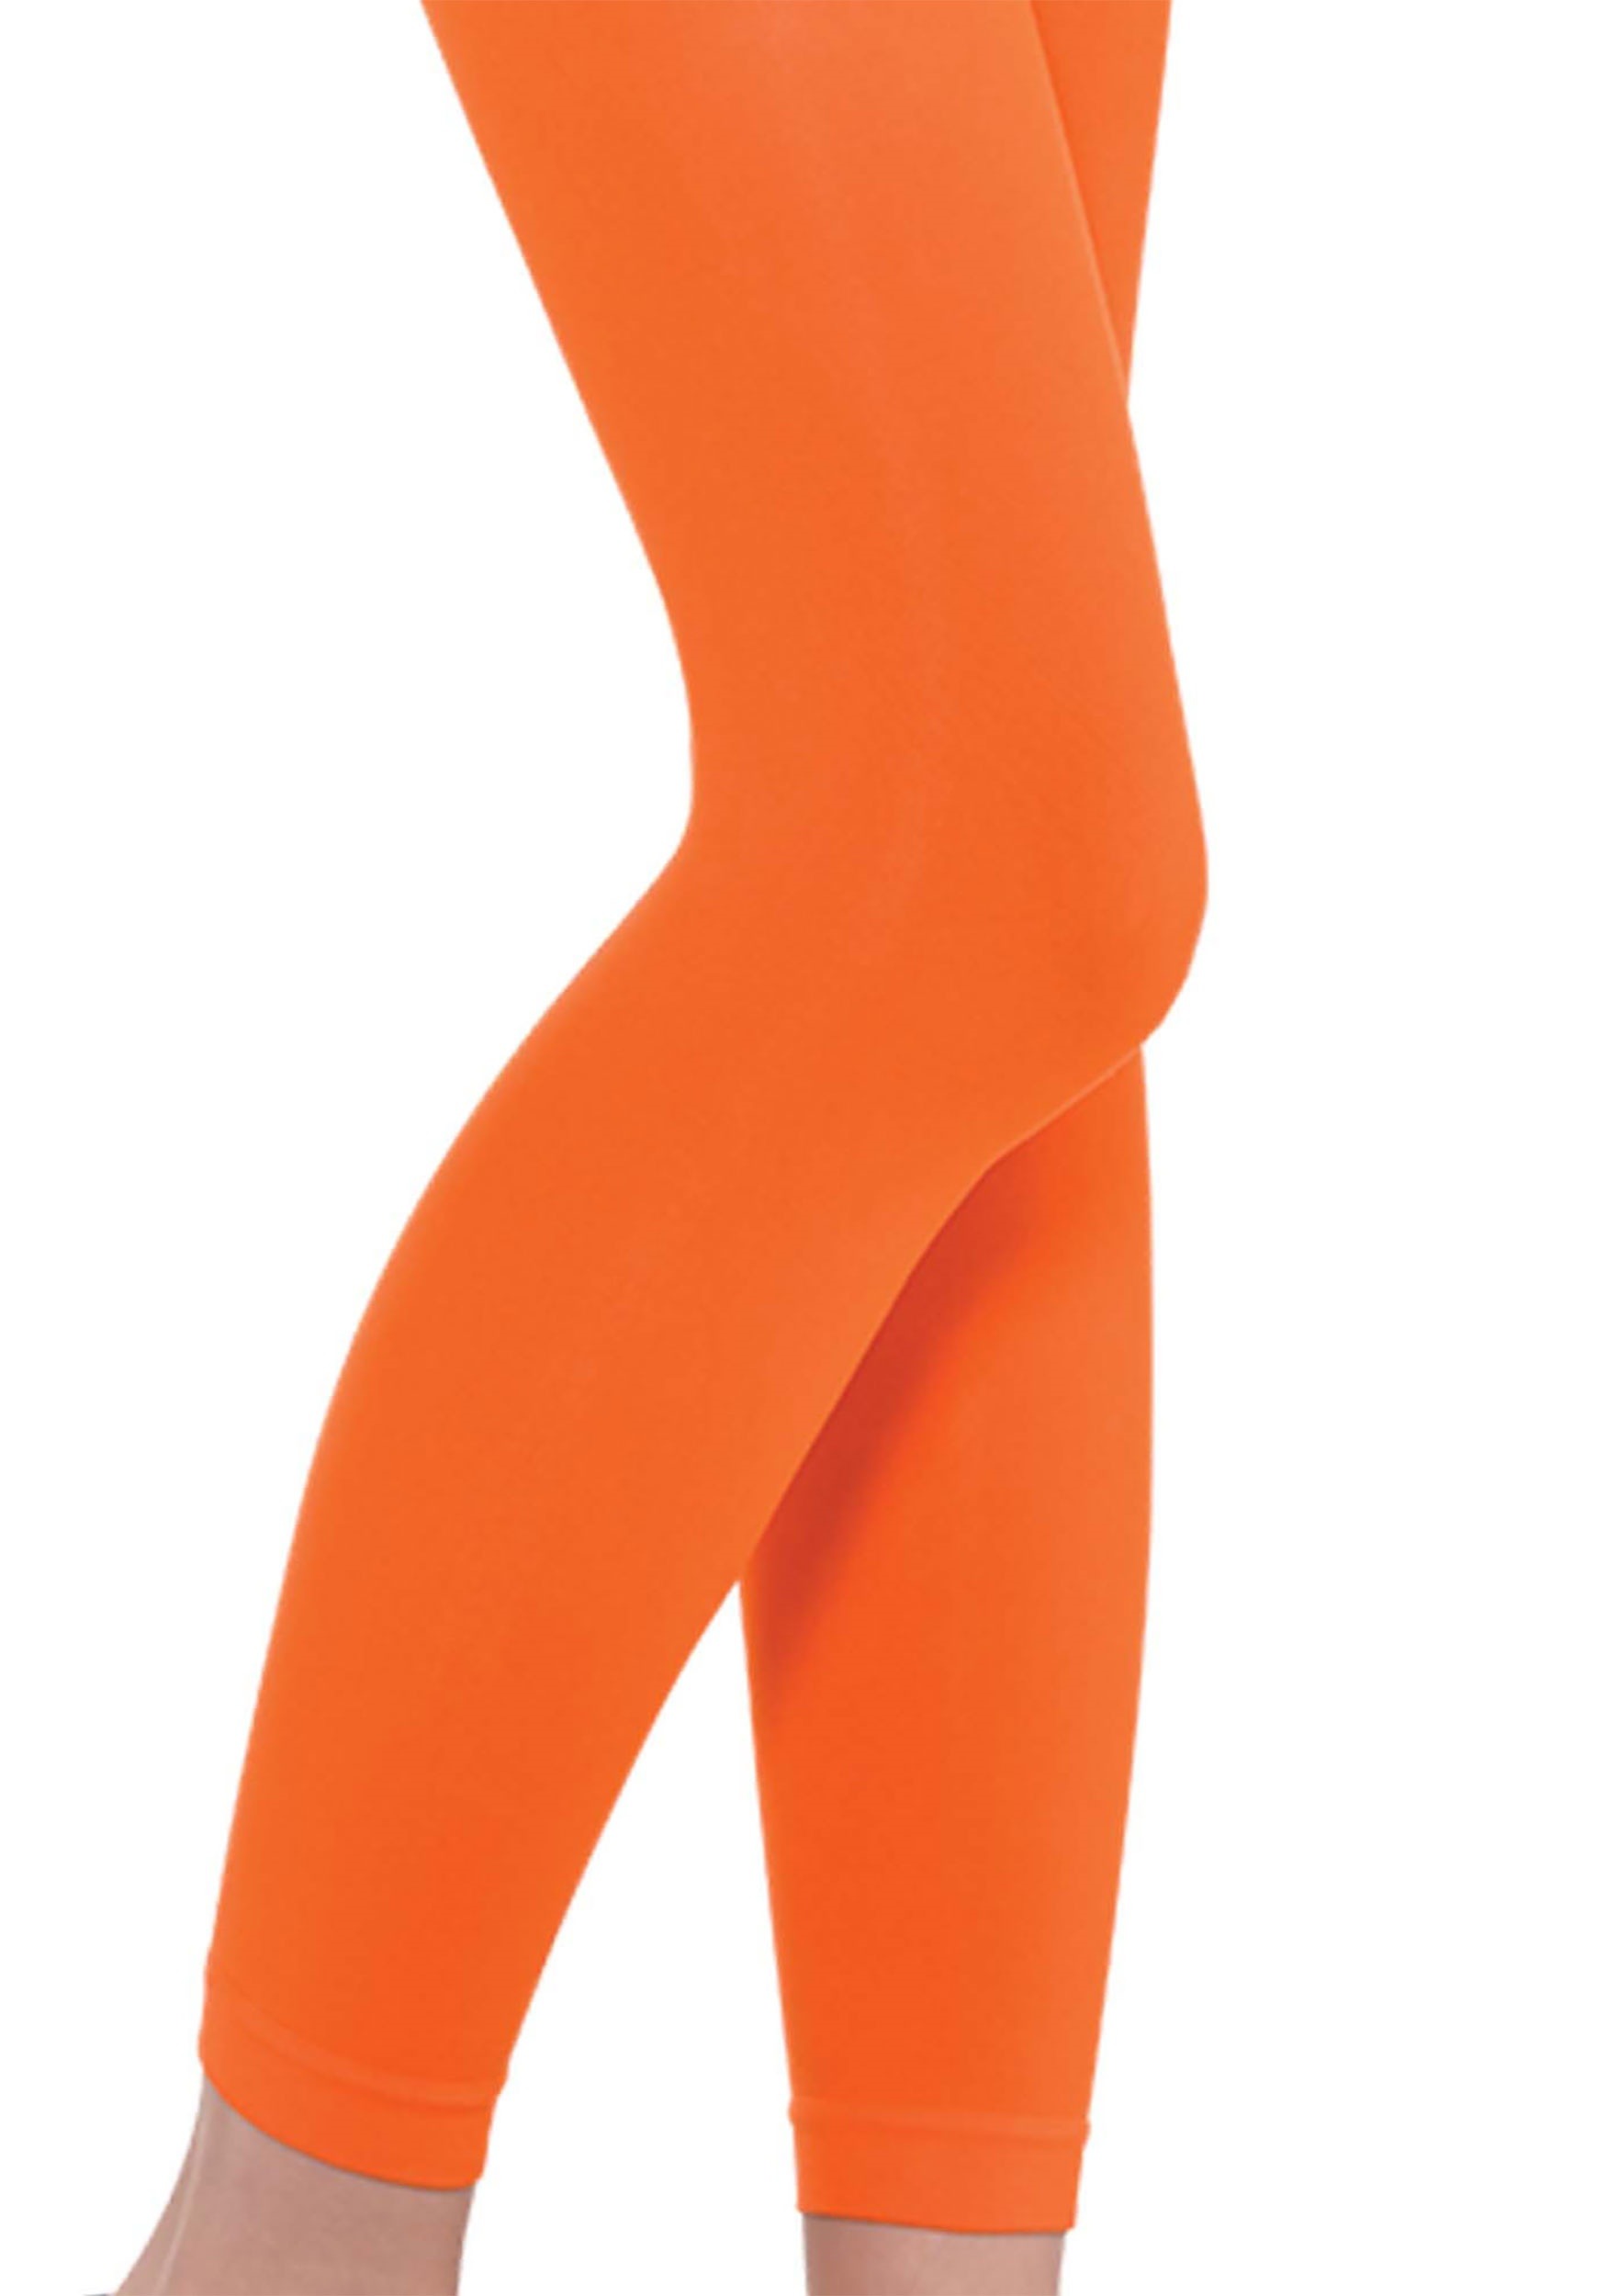 https://images.halloweencostumes.ca/products/54270/1-1/child-orange-leggings.jpg